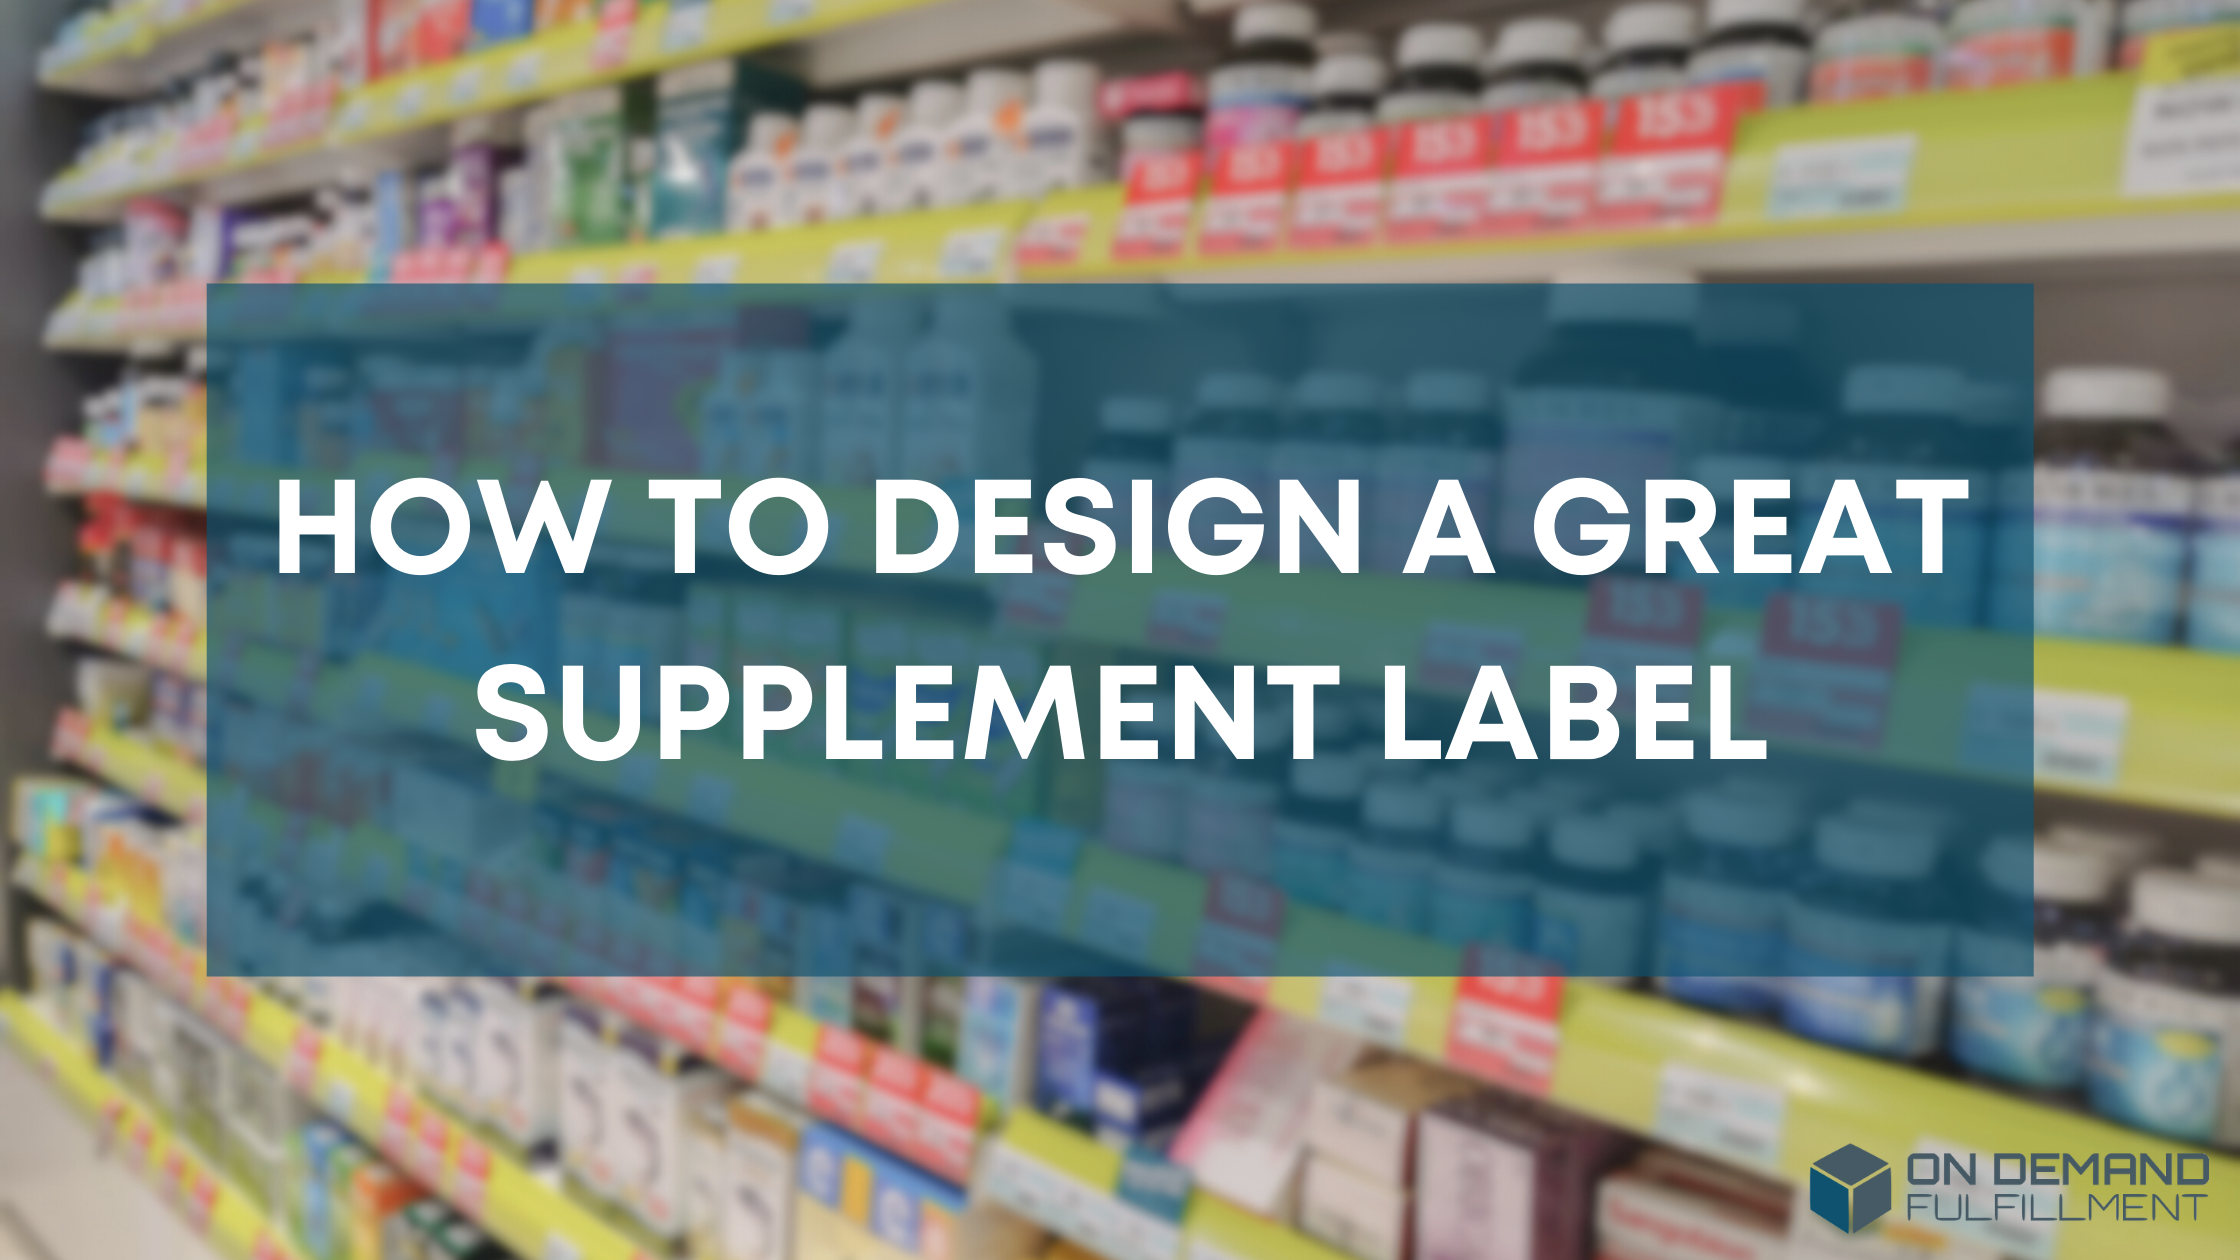 Supplement Label On Demand Fulfillment